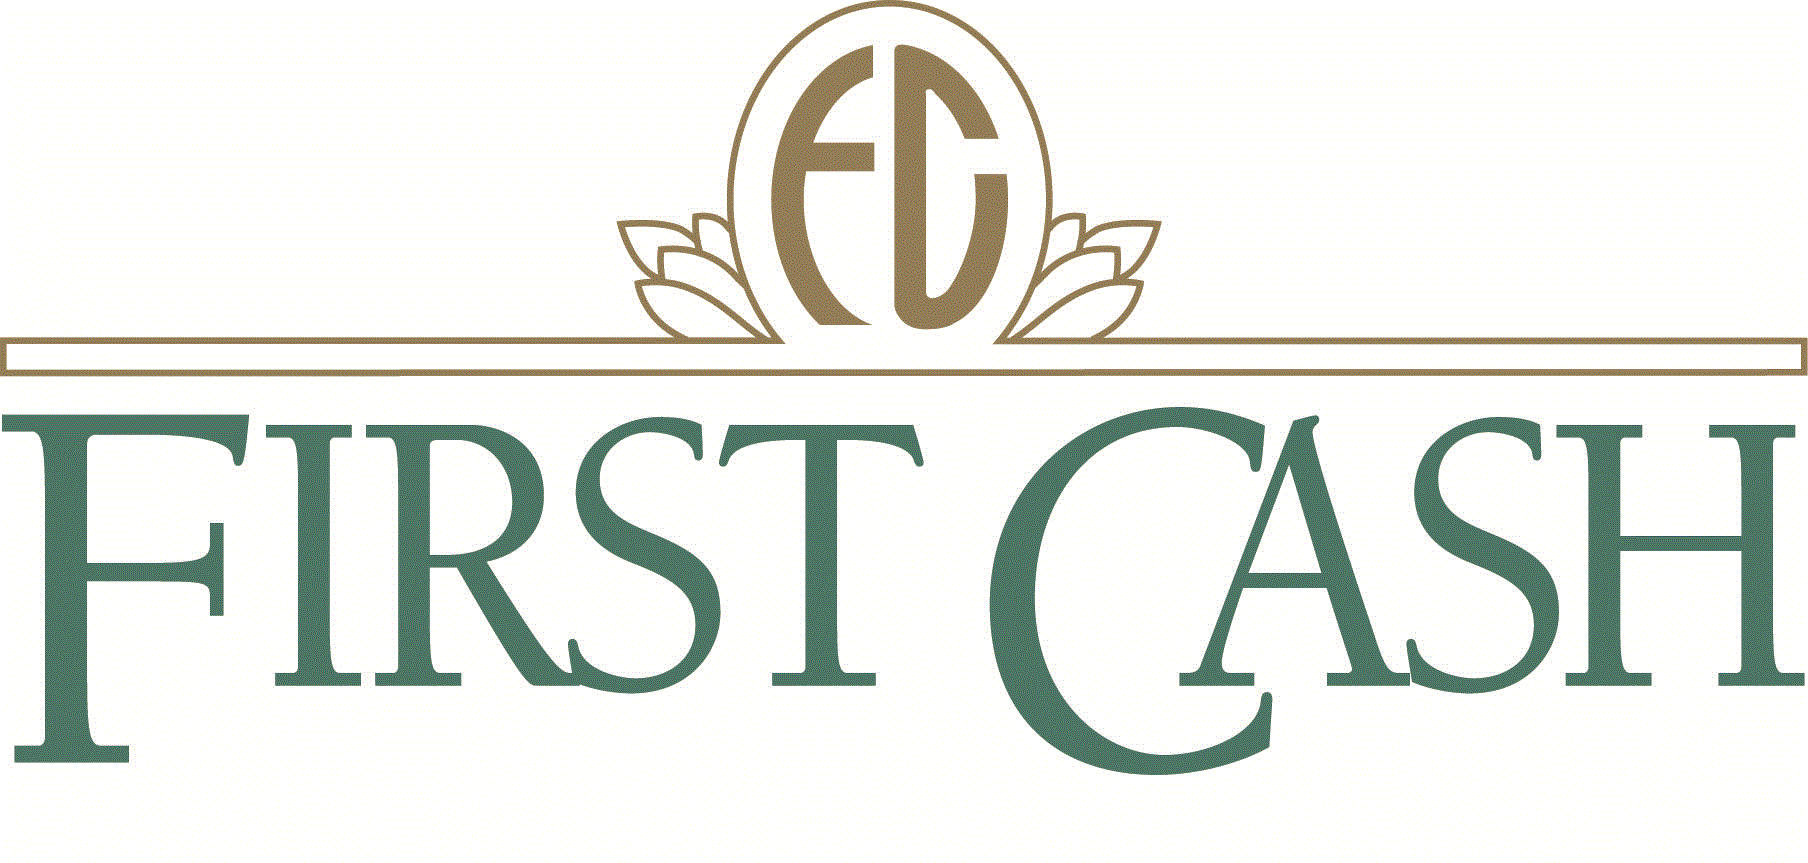 Cash Report Logo - Firstcash, Inc (FCFS) 10-K Annual Report Thu Feb 12 2015 | Last10K